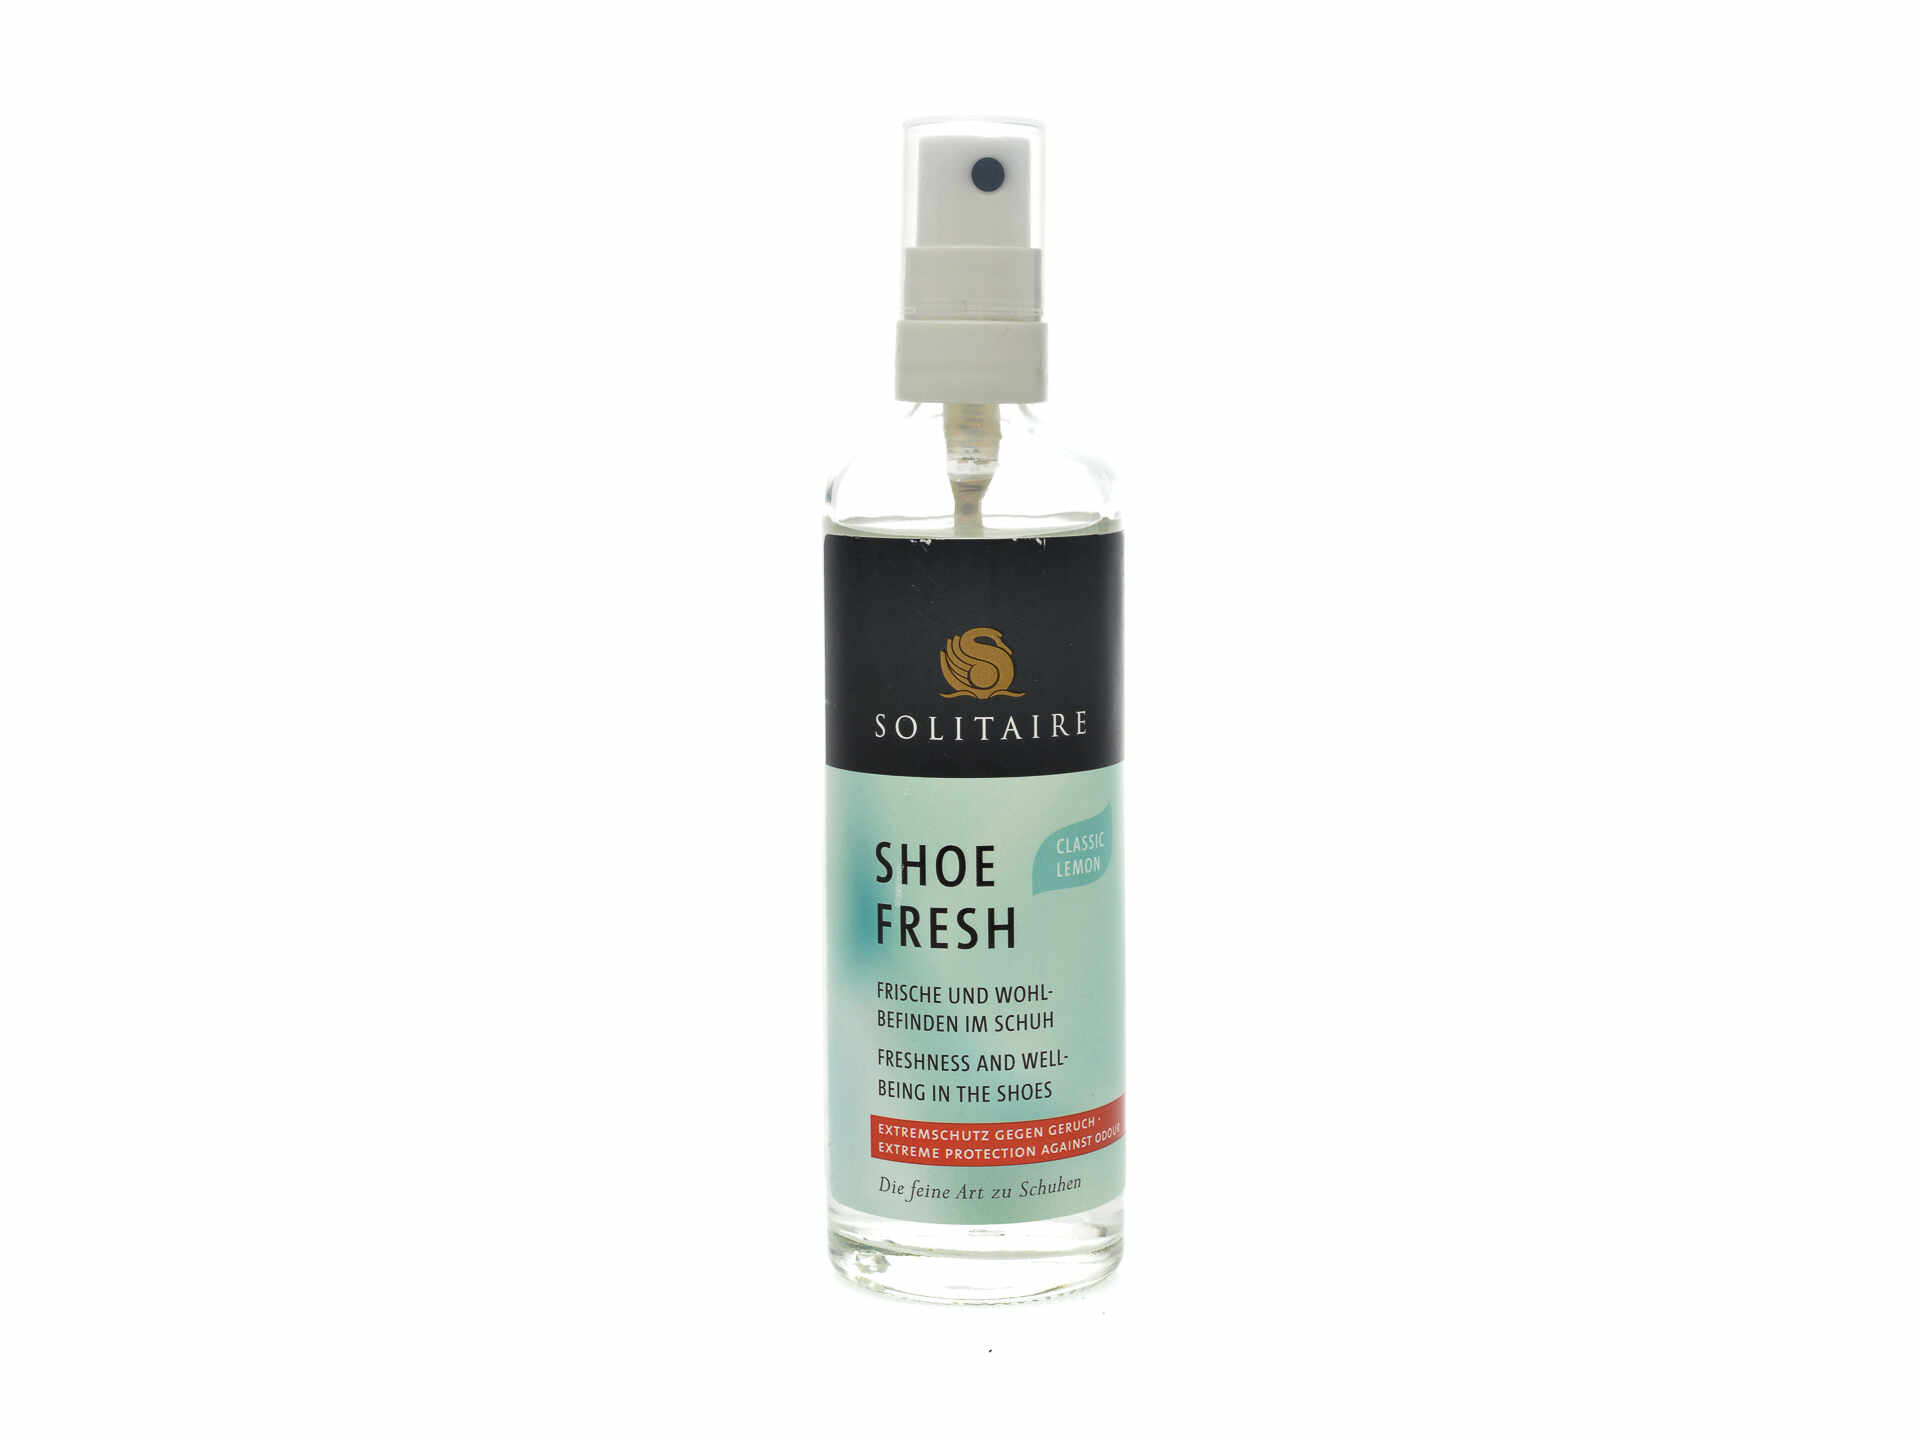 PR Spray pentru mentinerea mirosului placut in incaltaminte, Solitaire